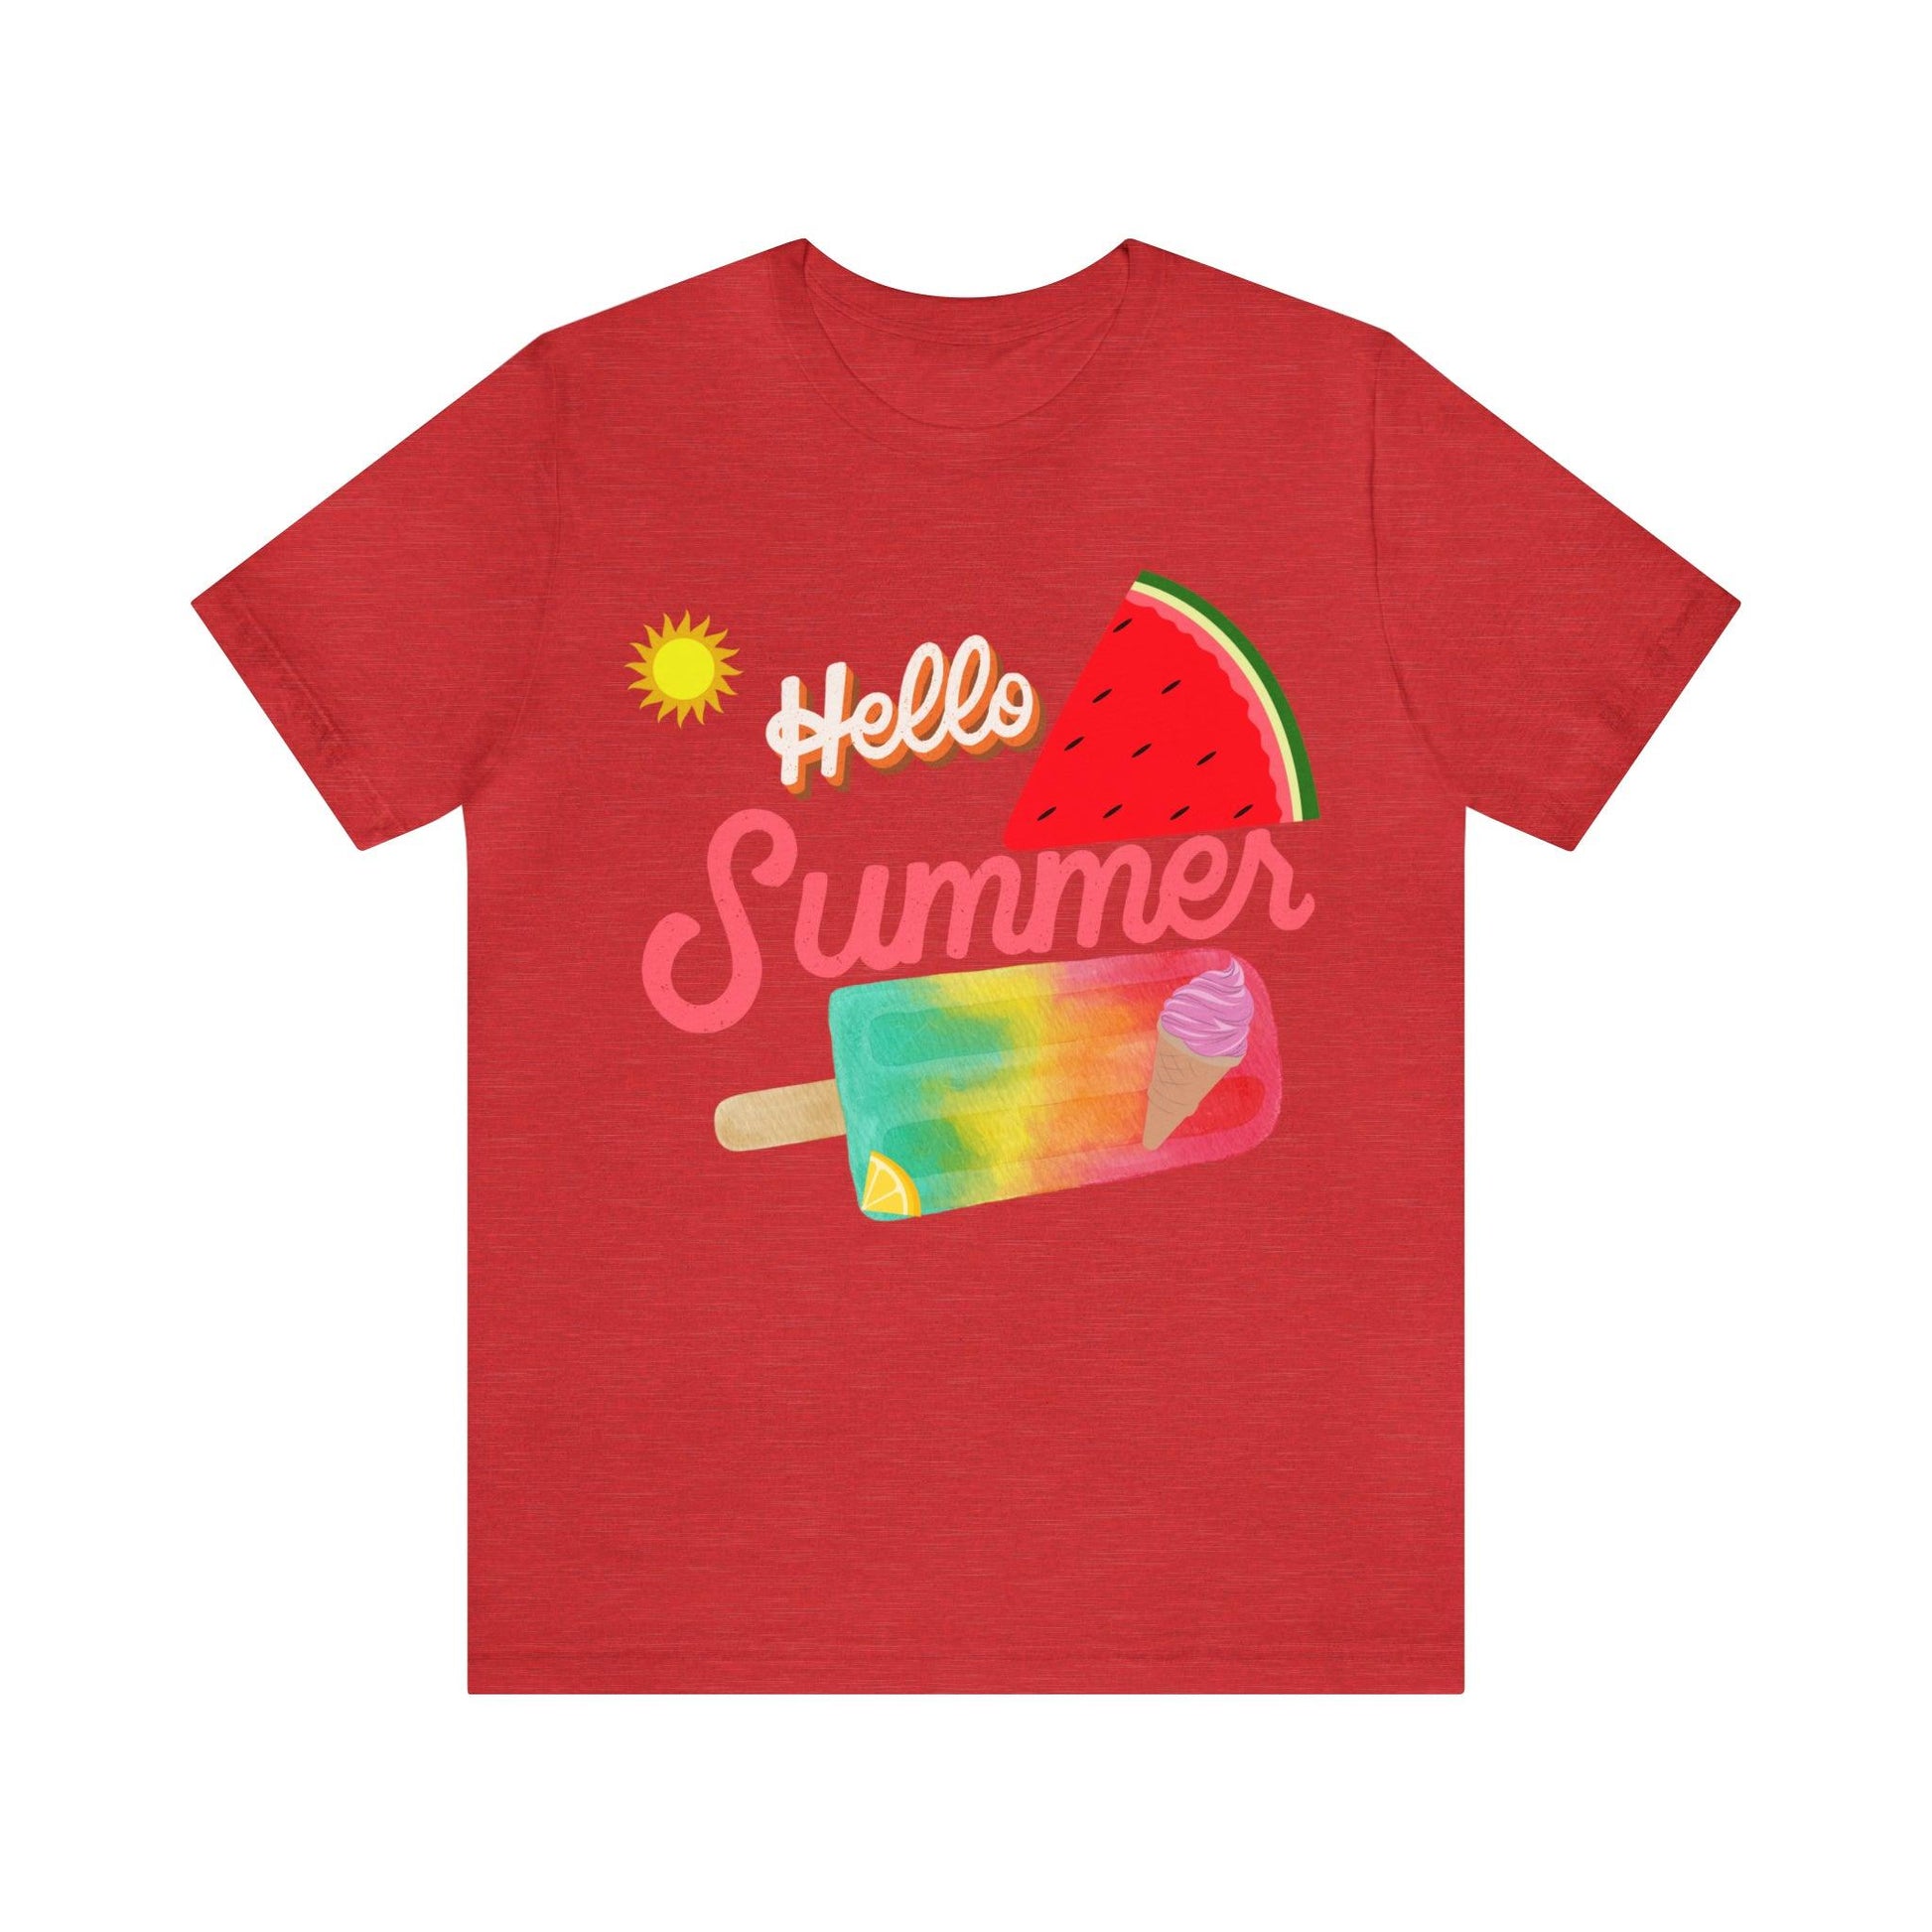 Hello Summer Shirt, Hello Summer, Summer shirts for women and men, Funny Shirt, Summer Vibes, Trendy Fashion, Summertime Fun - Giftsmojo